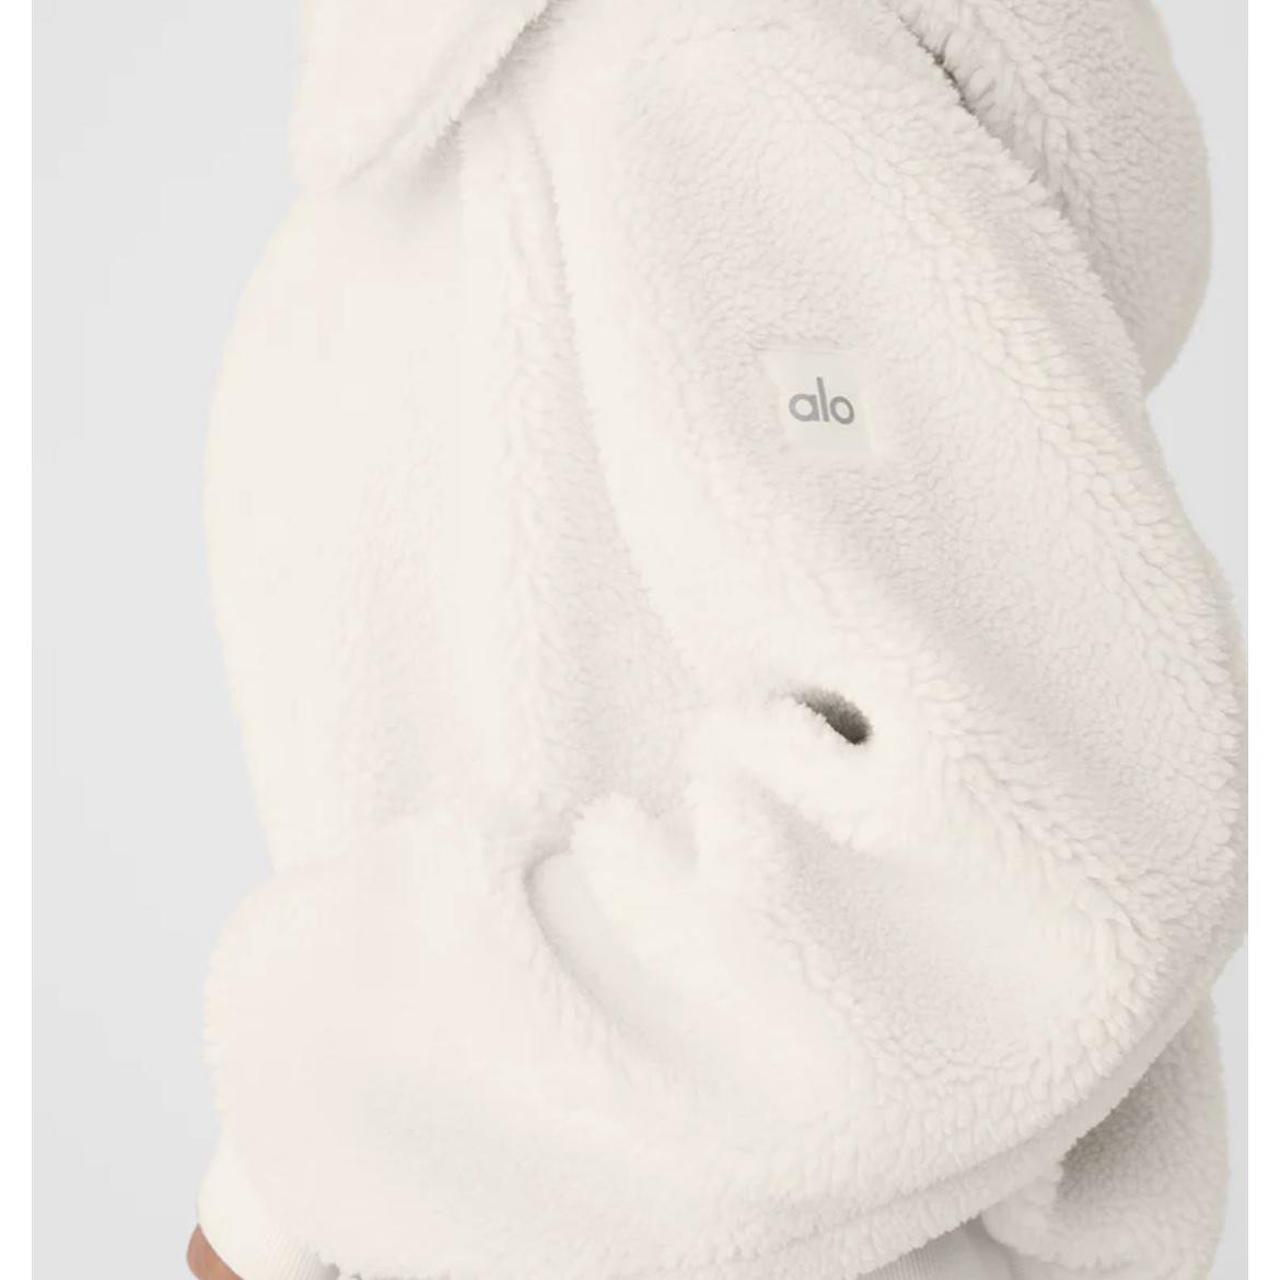 Selling a super cute Alo yoga cropped sherpa jacket. - Depop